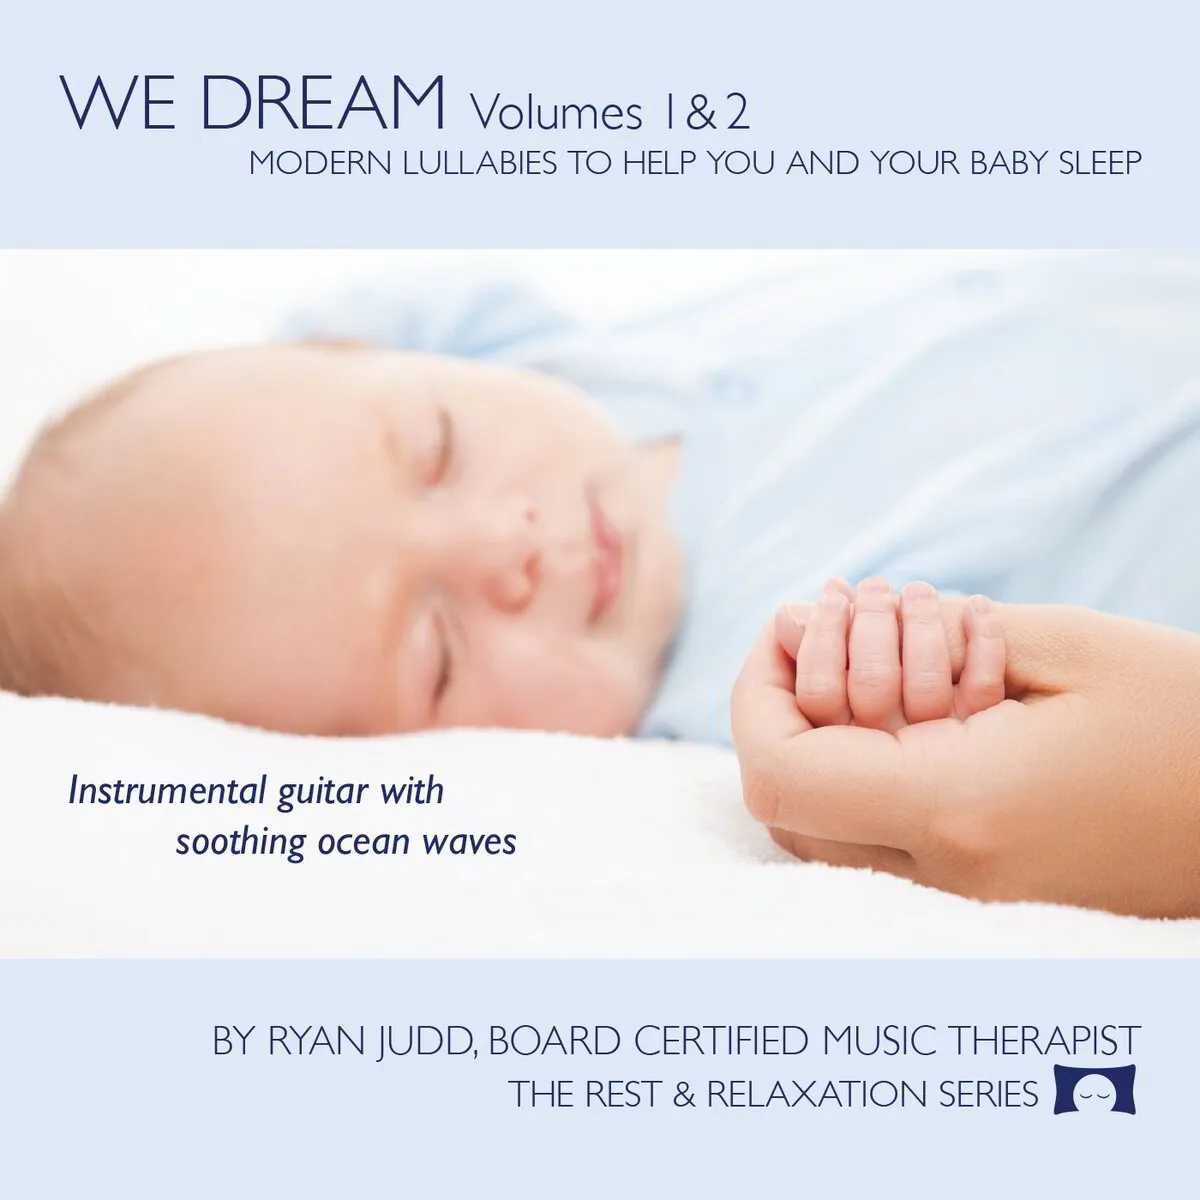 Lullaby Sleep Album, We Dream: Volumes 1 & 2 - Recording - Physical CD